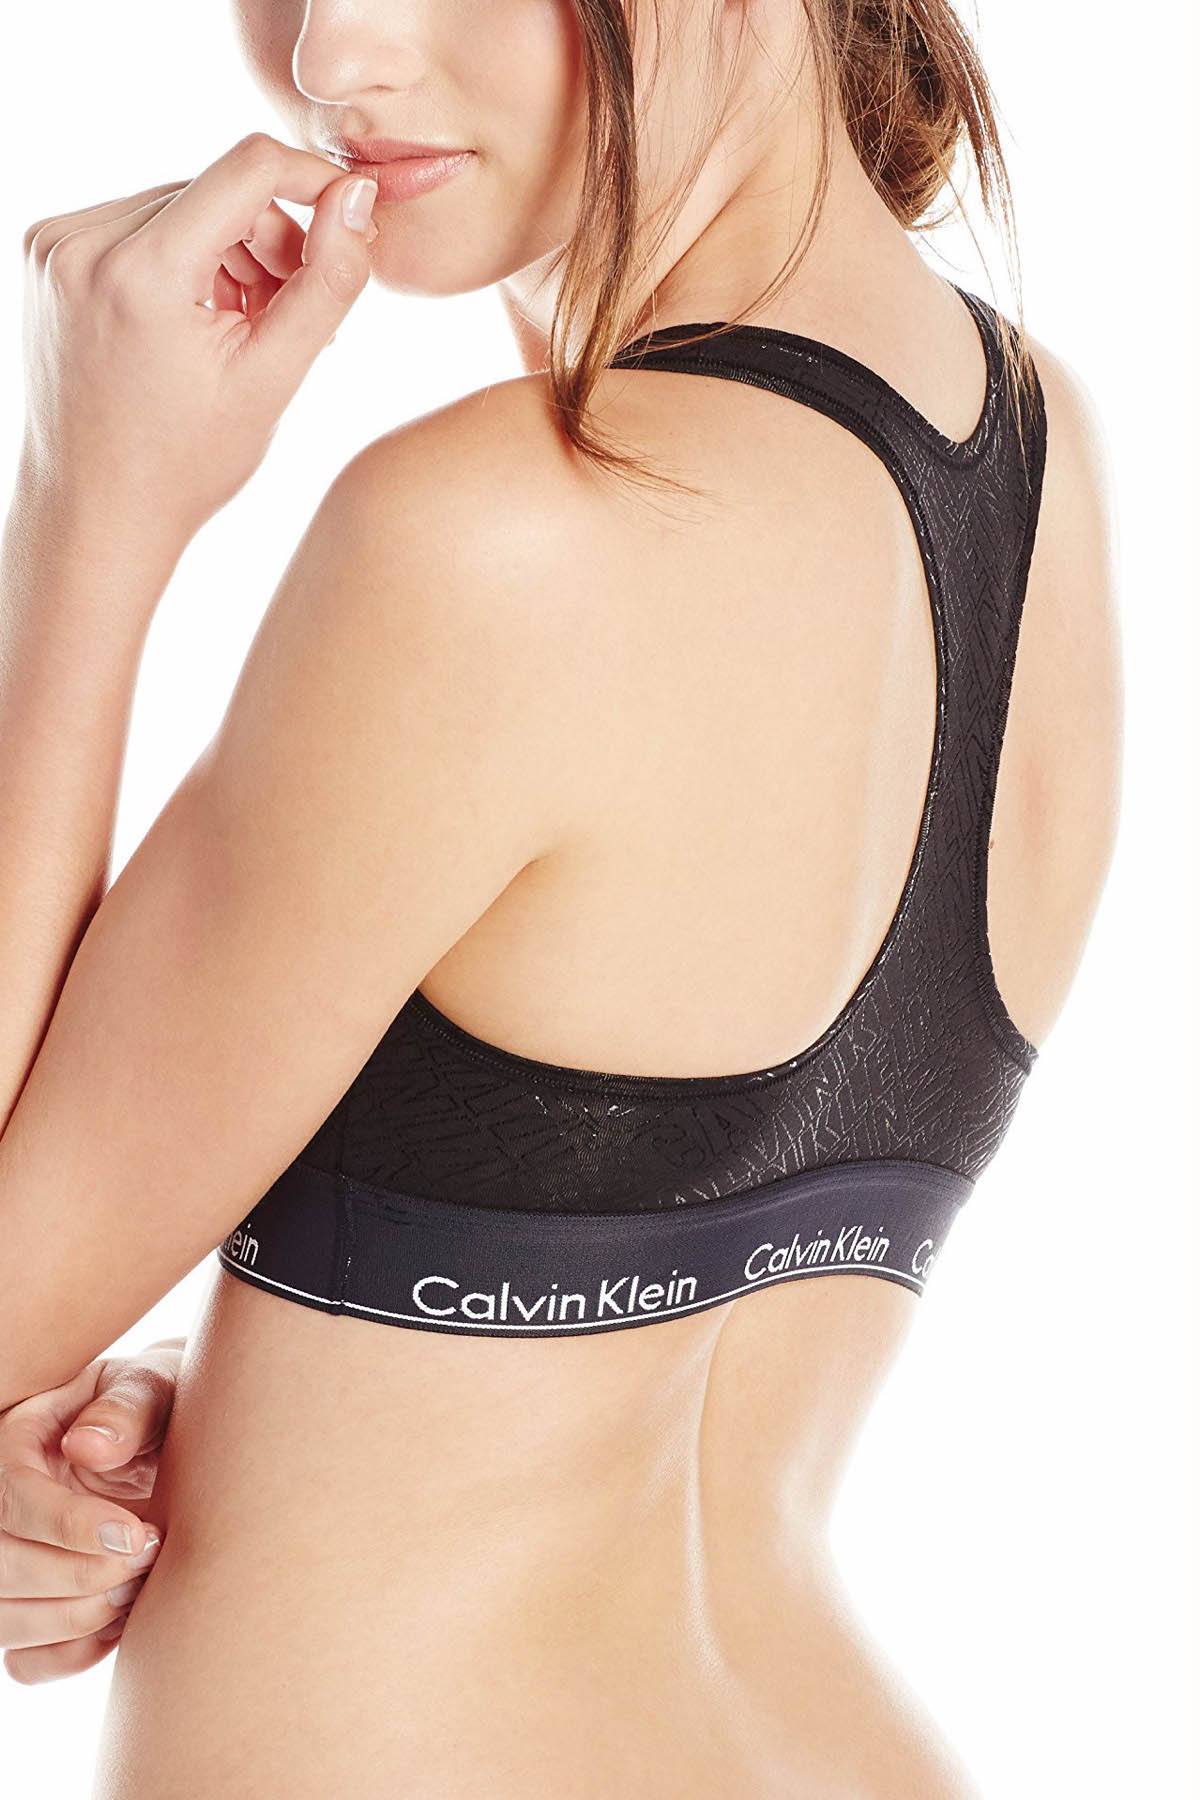 Calvin Klein Seamless Logo Bikini Black QF1631 - Free Shipping at